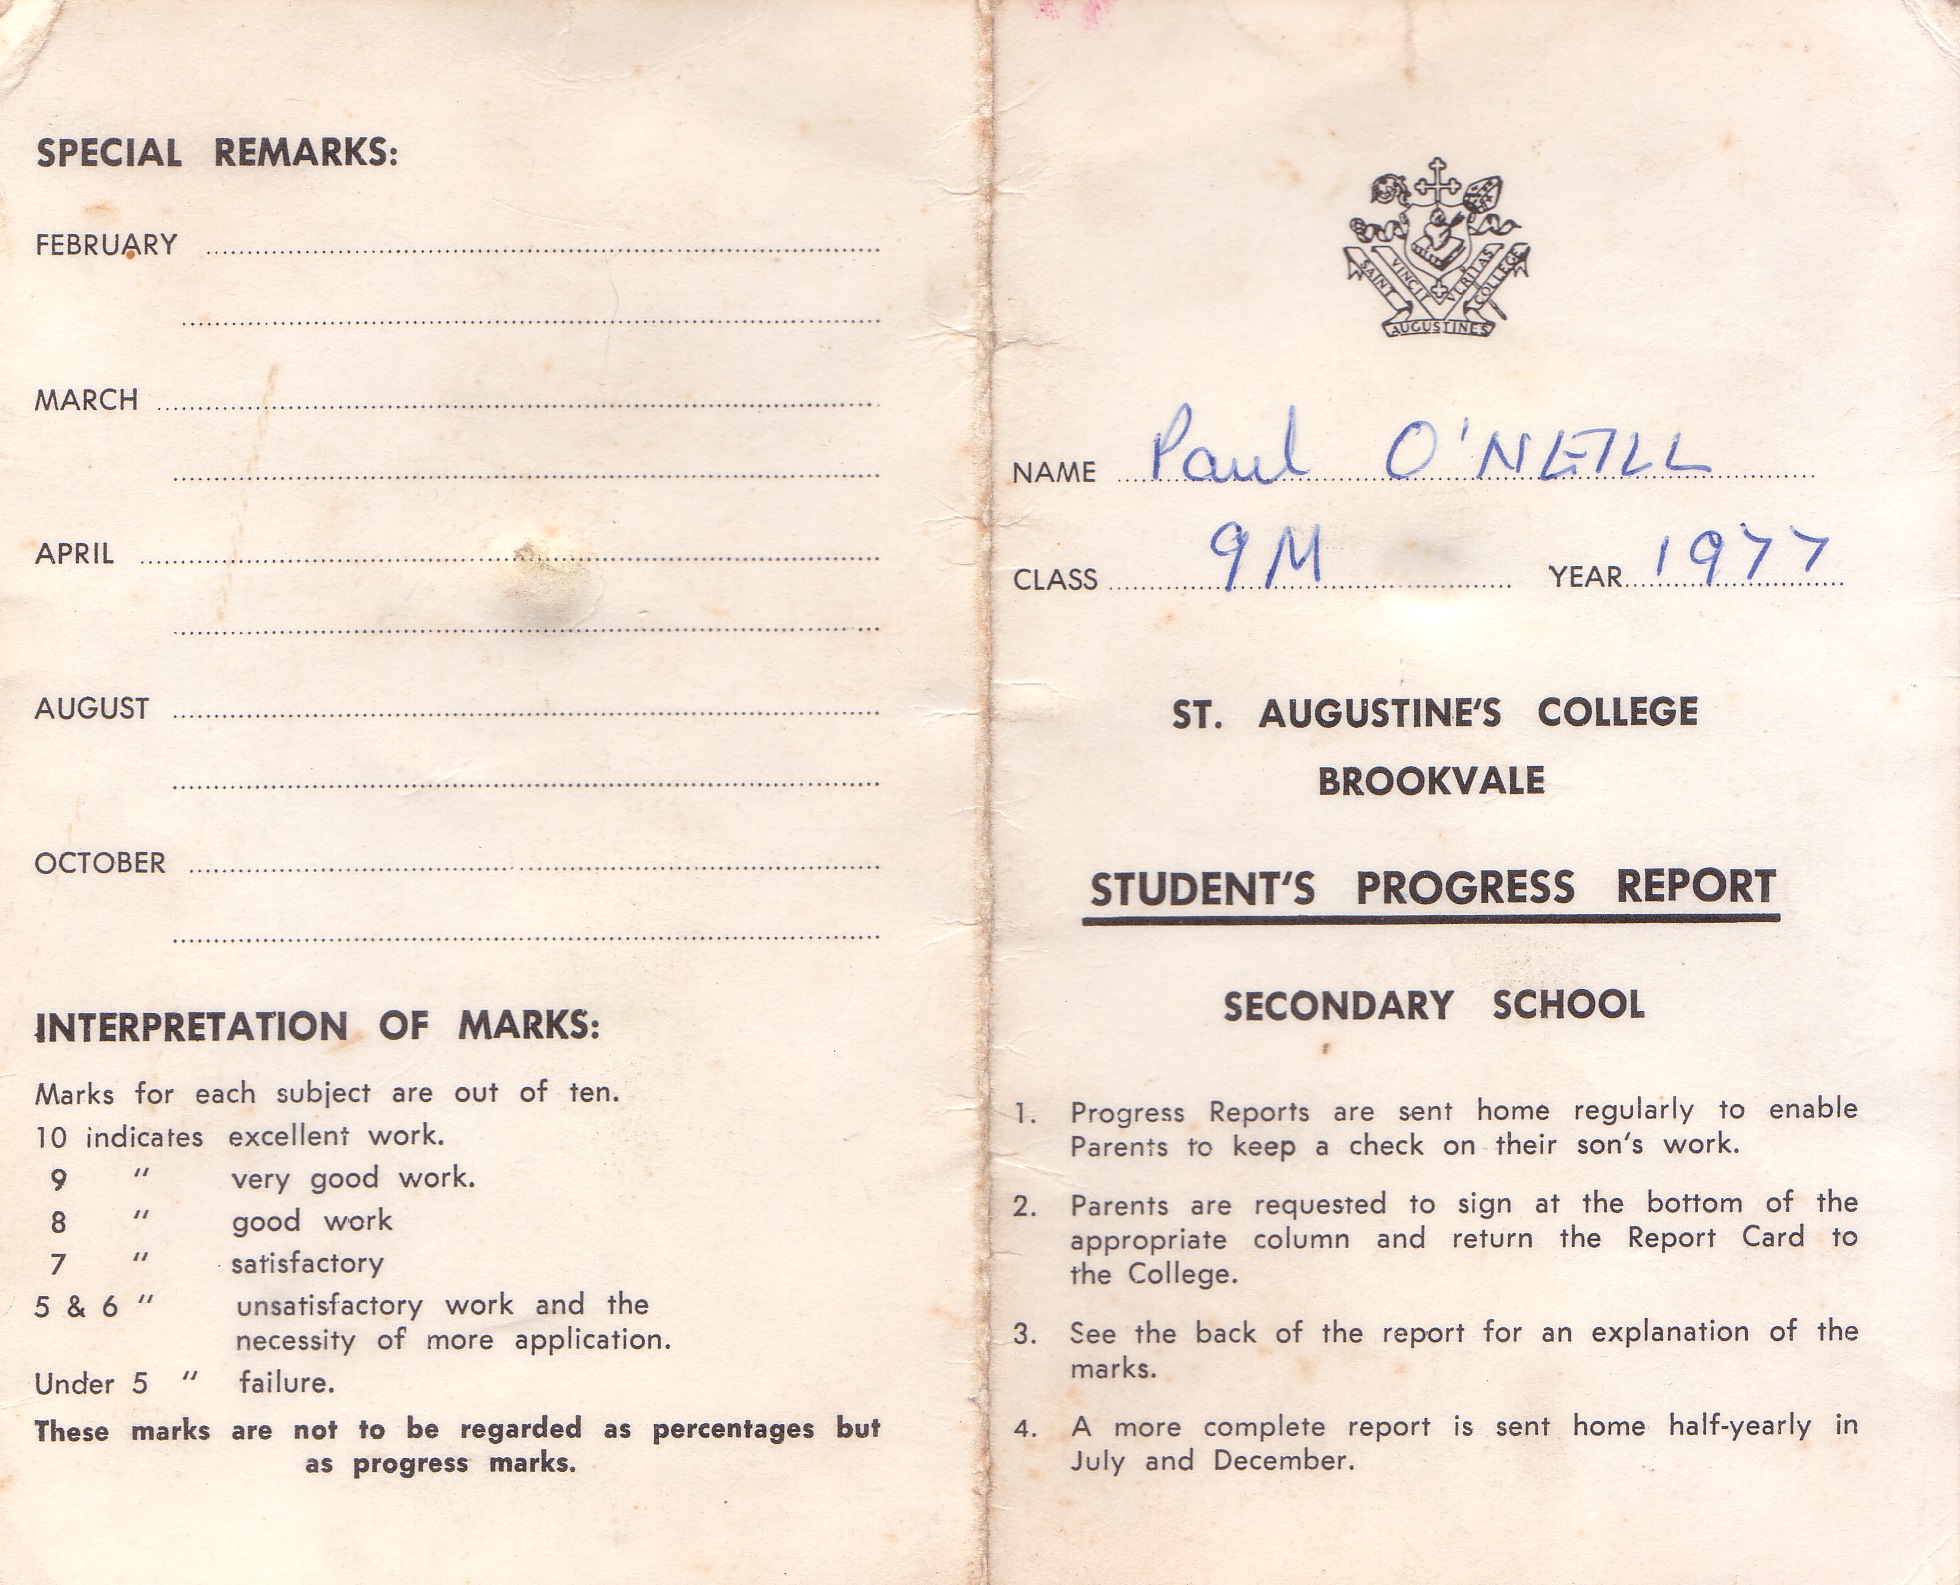 1977 - Class 9M progress report card